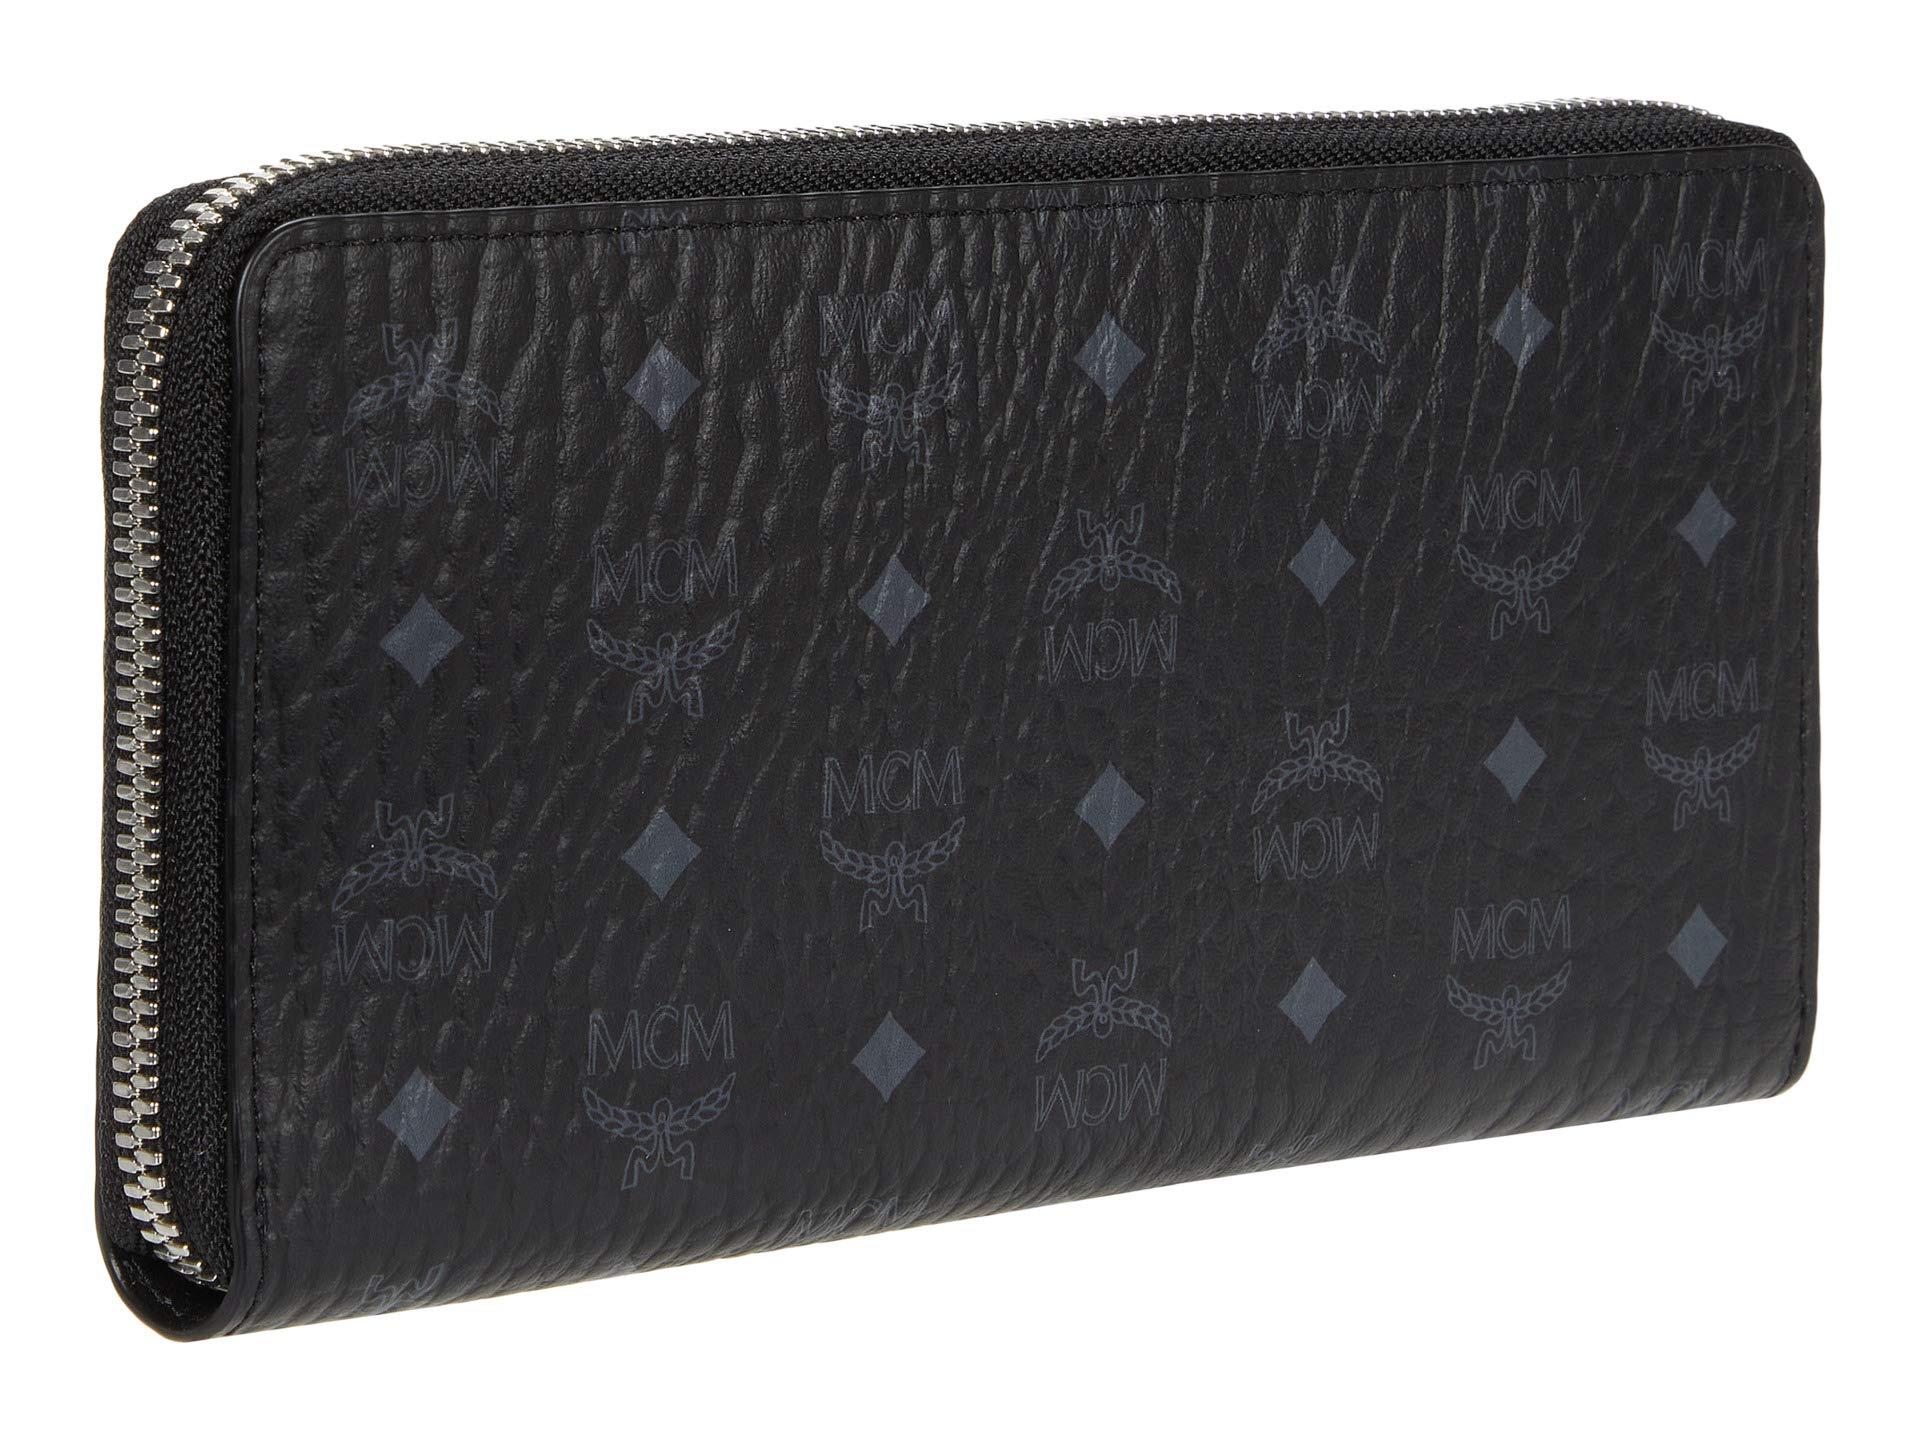 MCM Leather Visetos Original Zipped Wallet Large in Black - Lyst